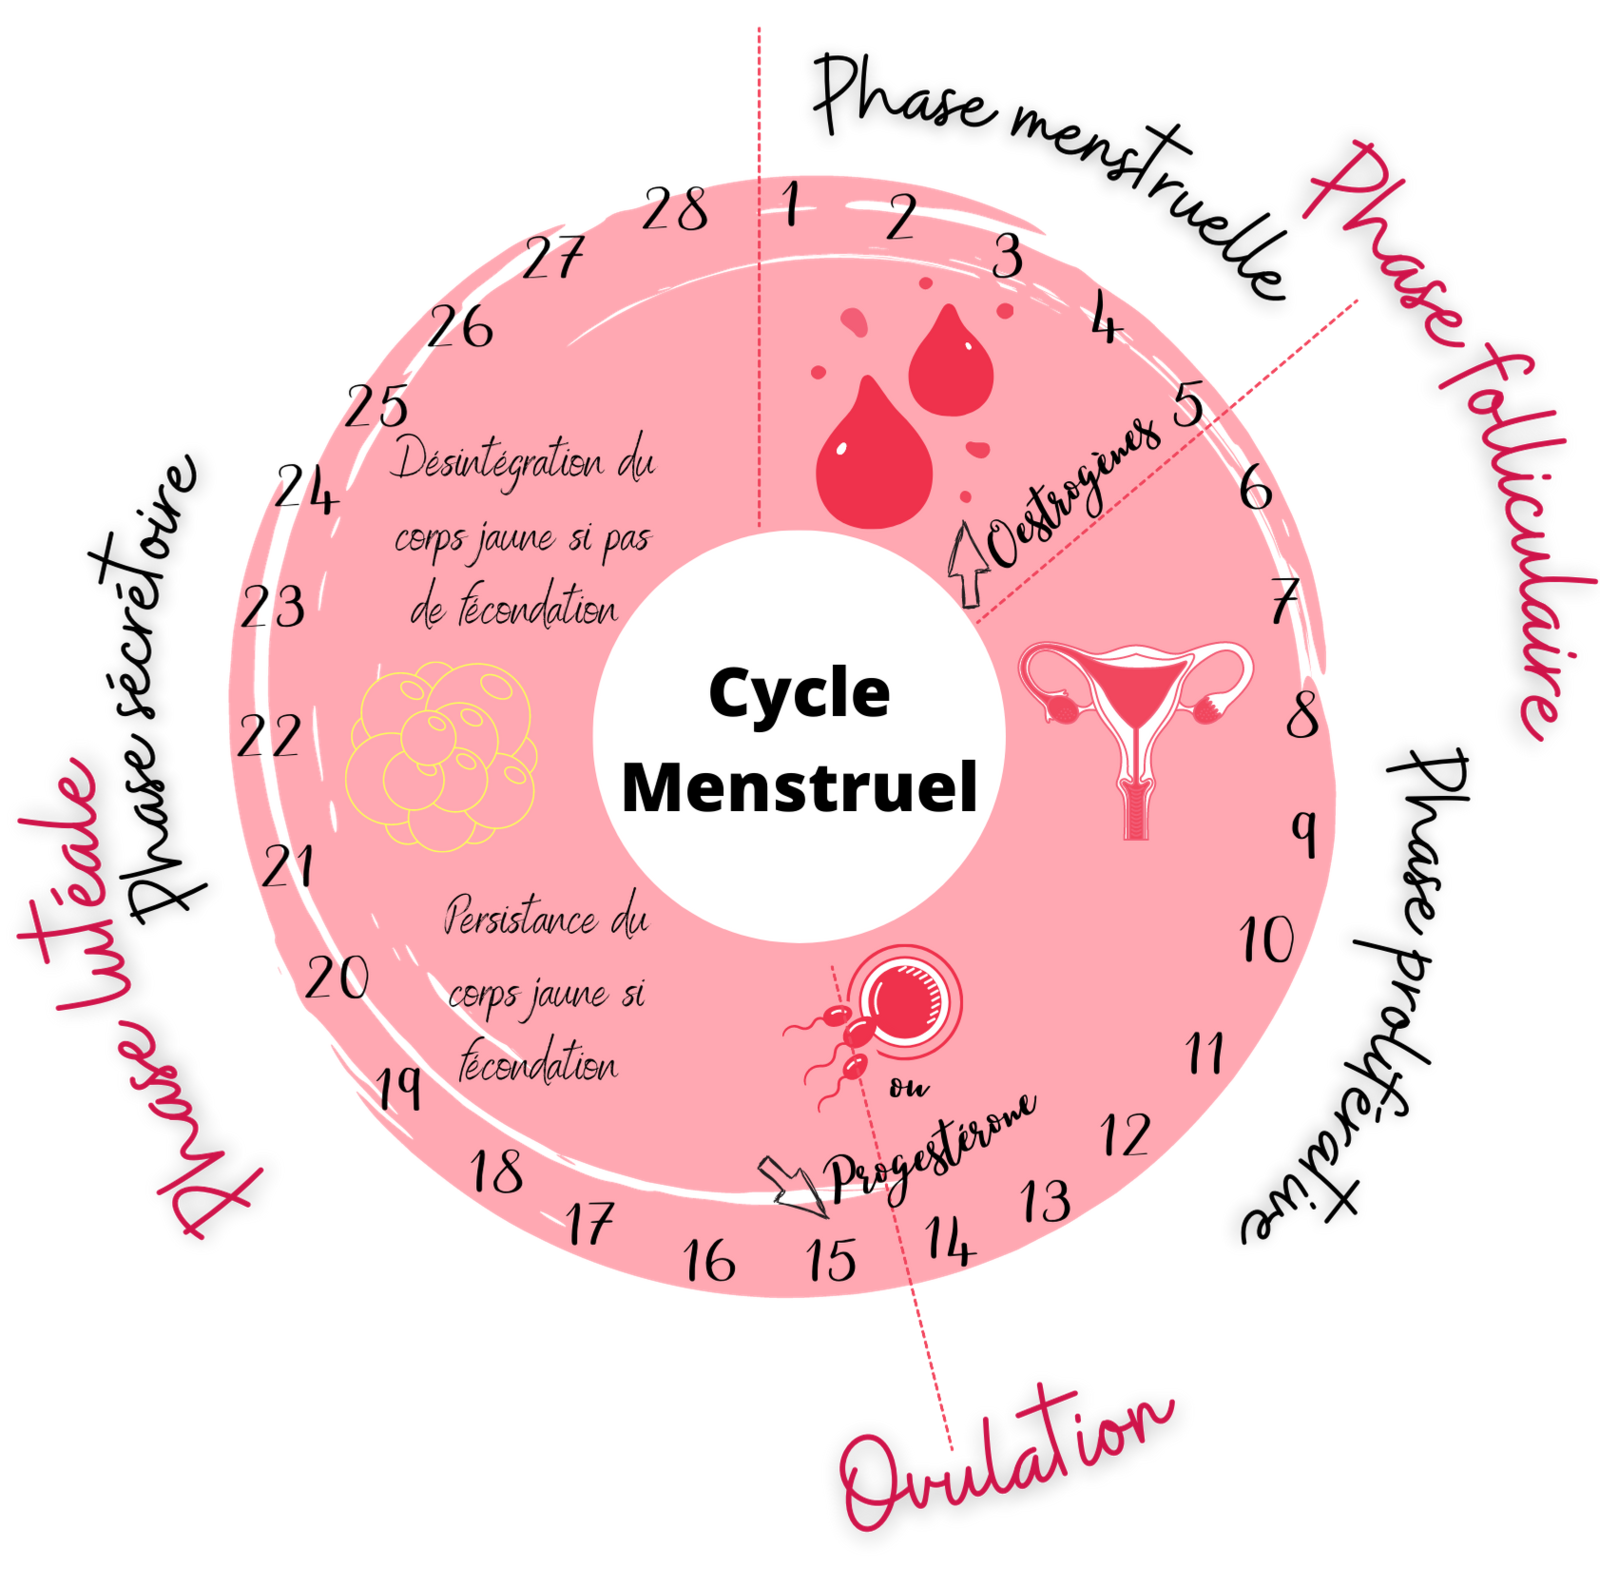 Le Cycle Menstruel De La Femme Articles